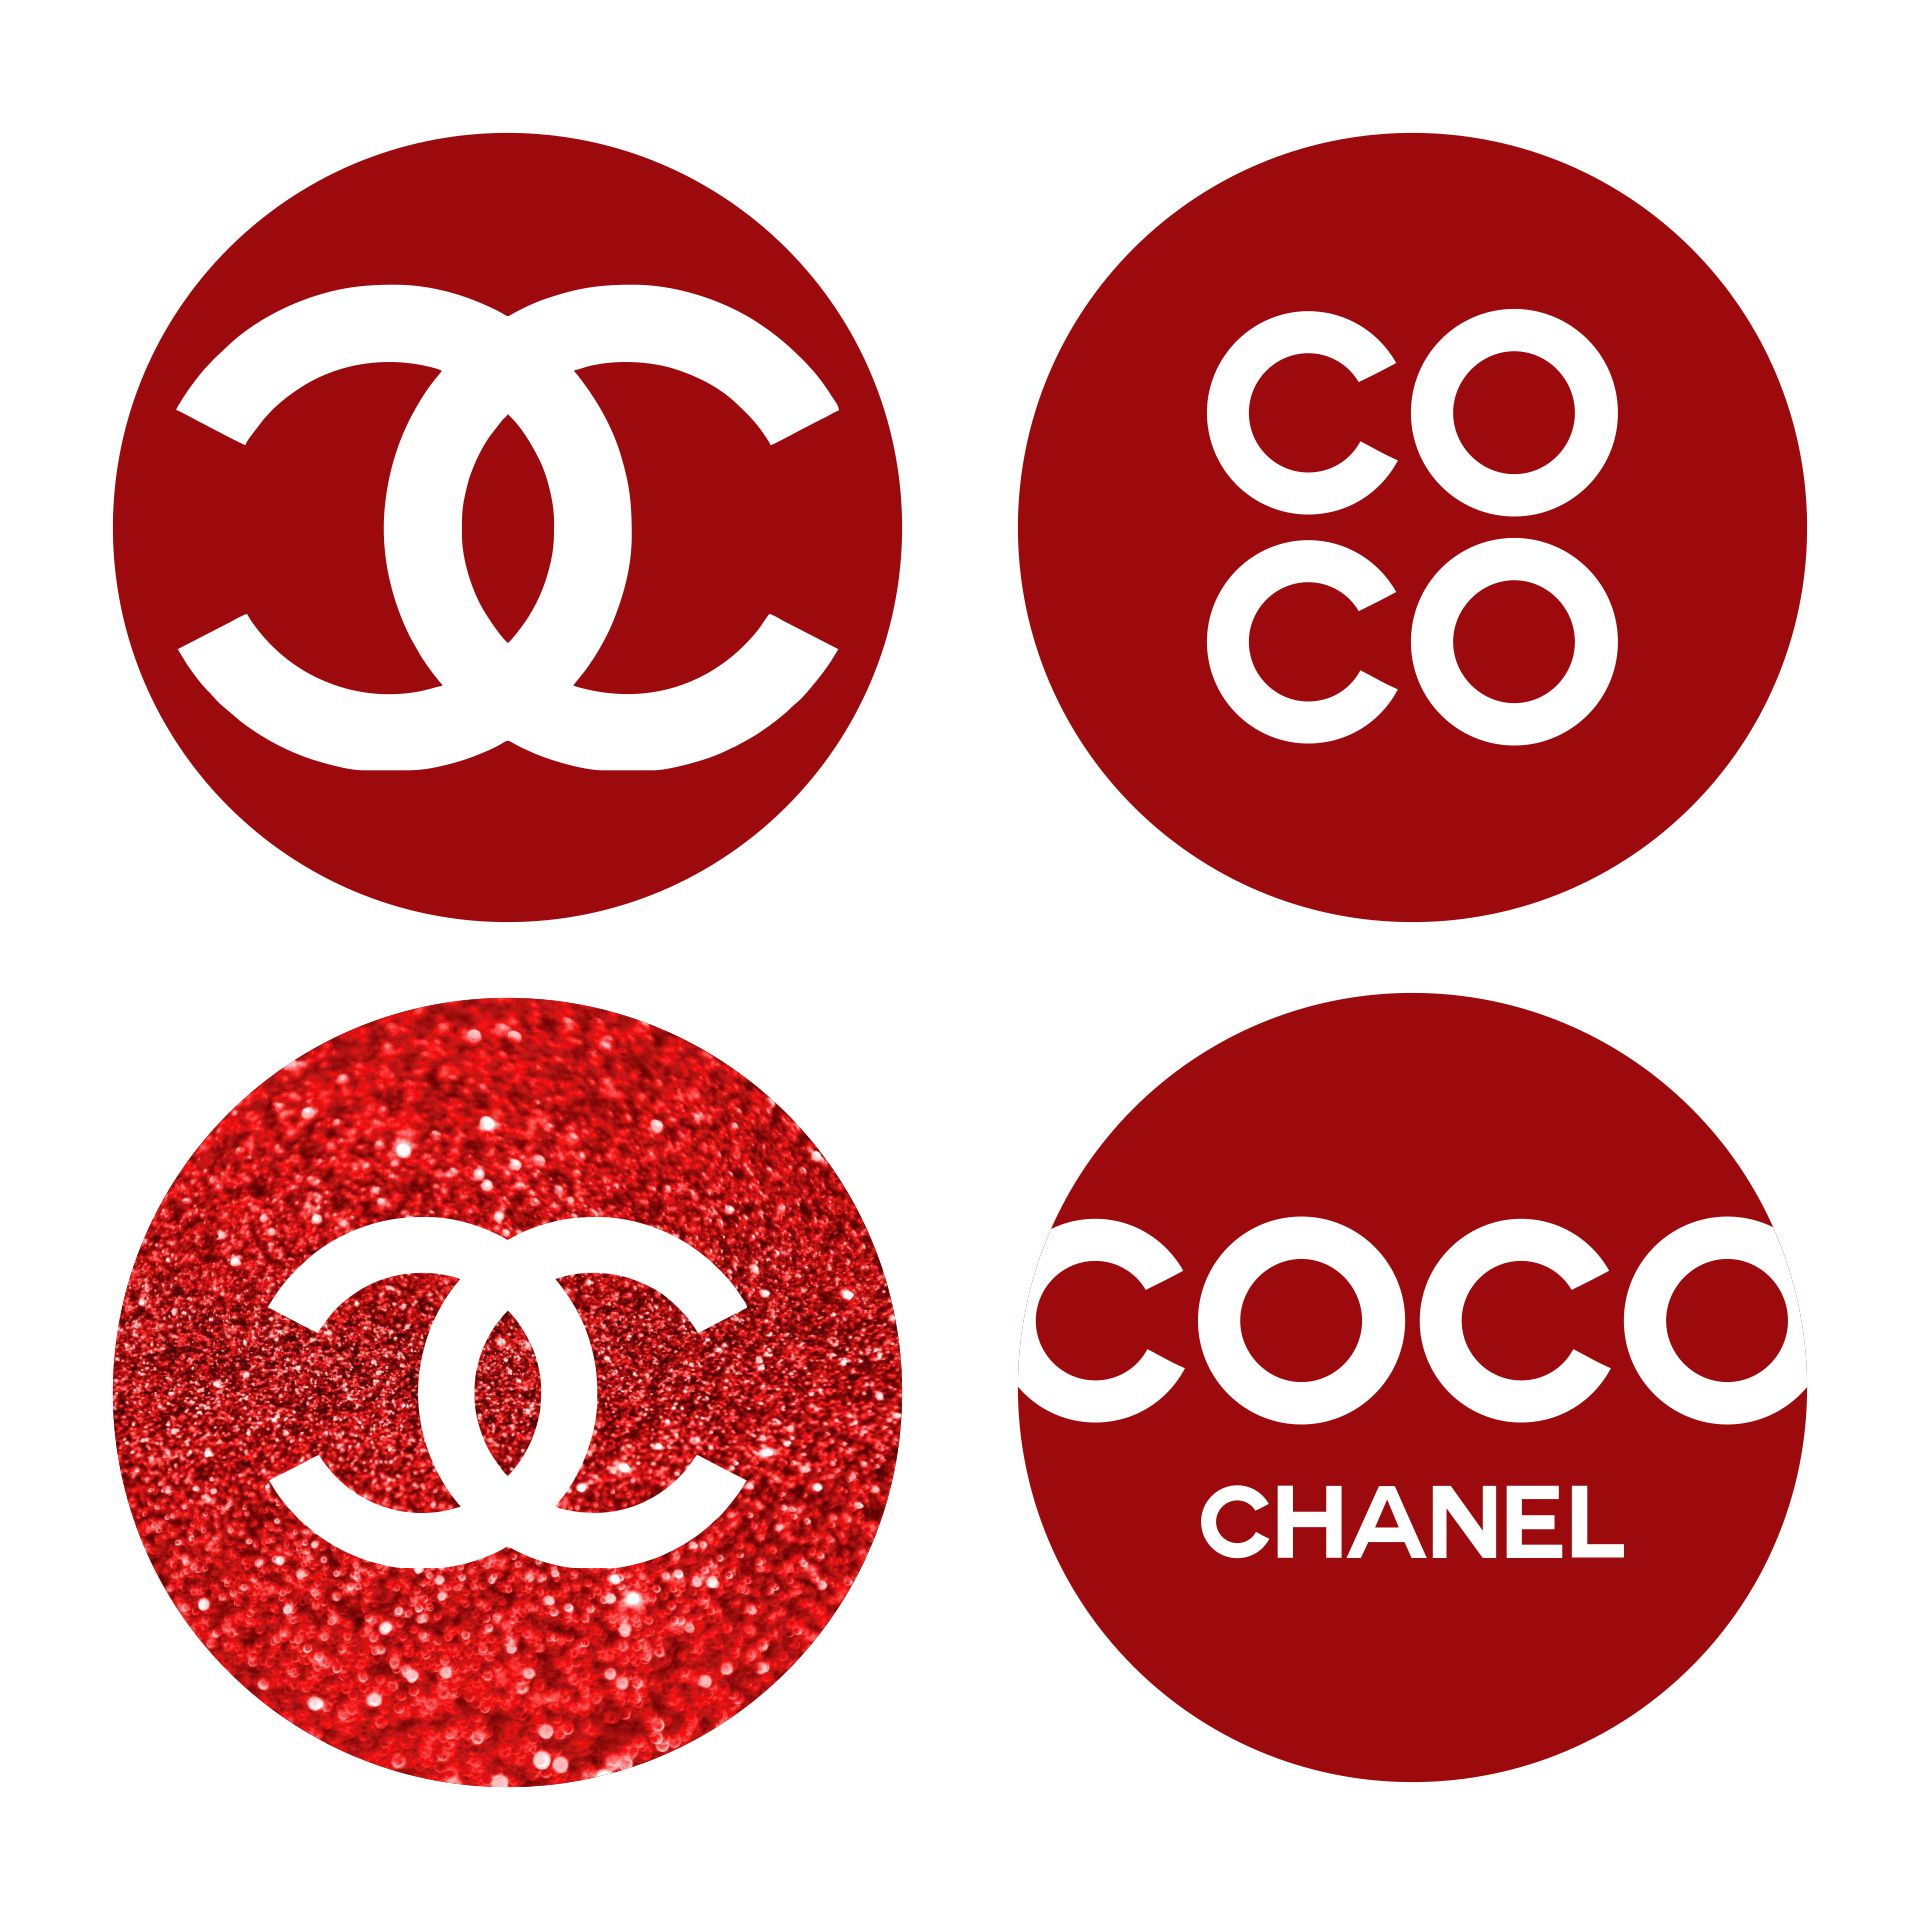 Mua Coco Chanel The Illustrated World of a Fashion Icon trên Amazon Mỹ  chính hãng 2023  Fado